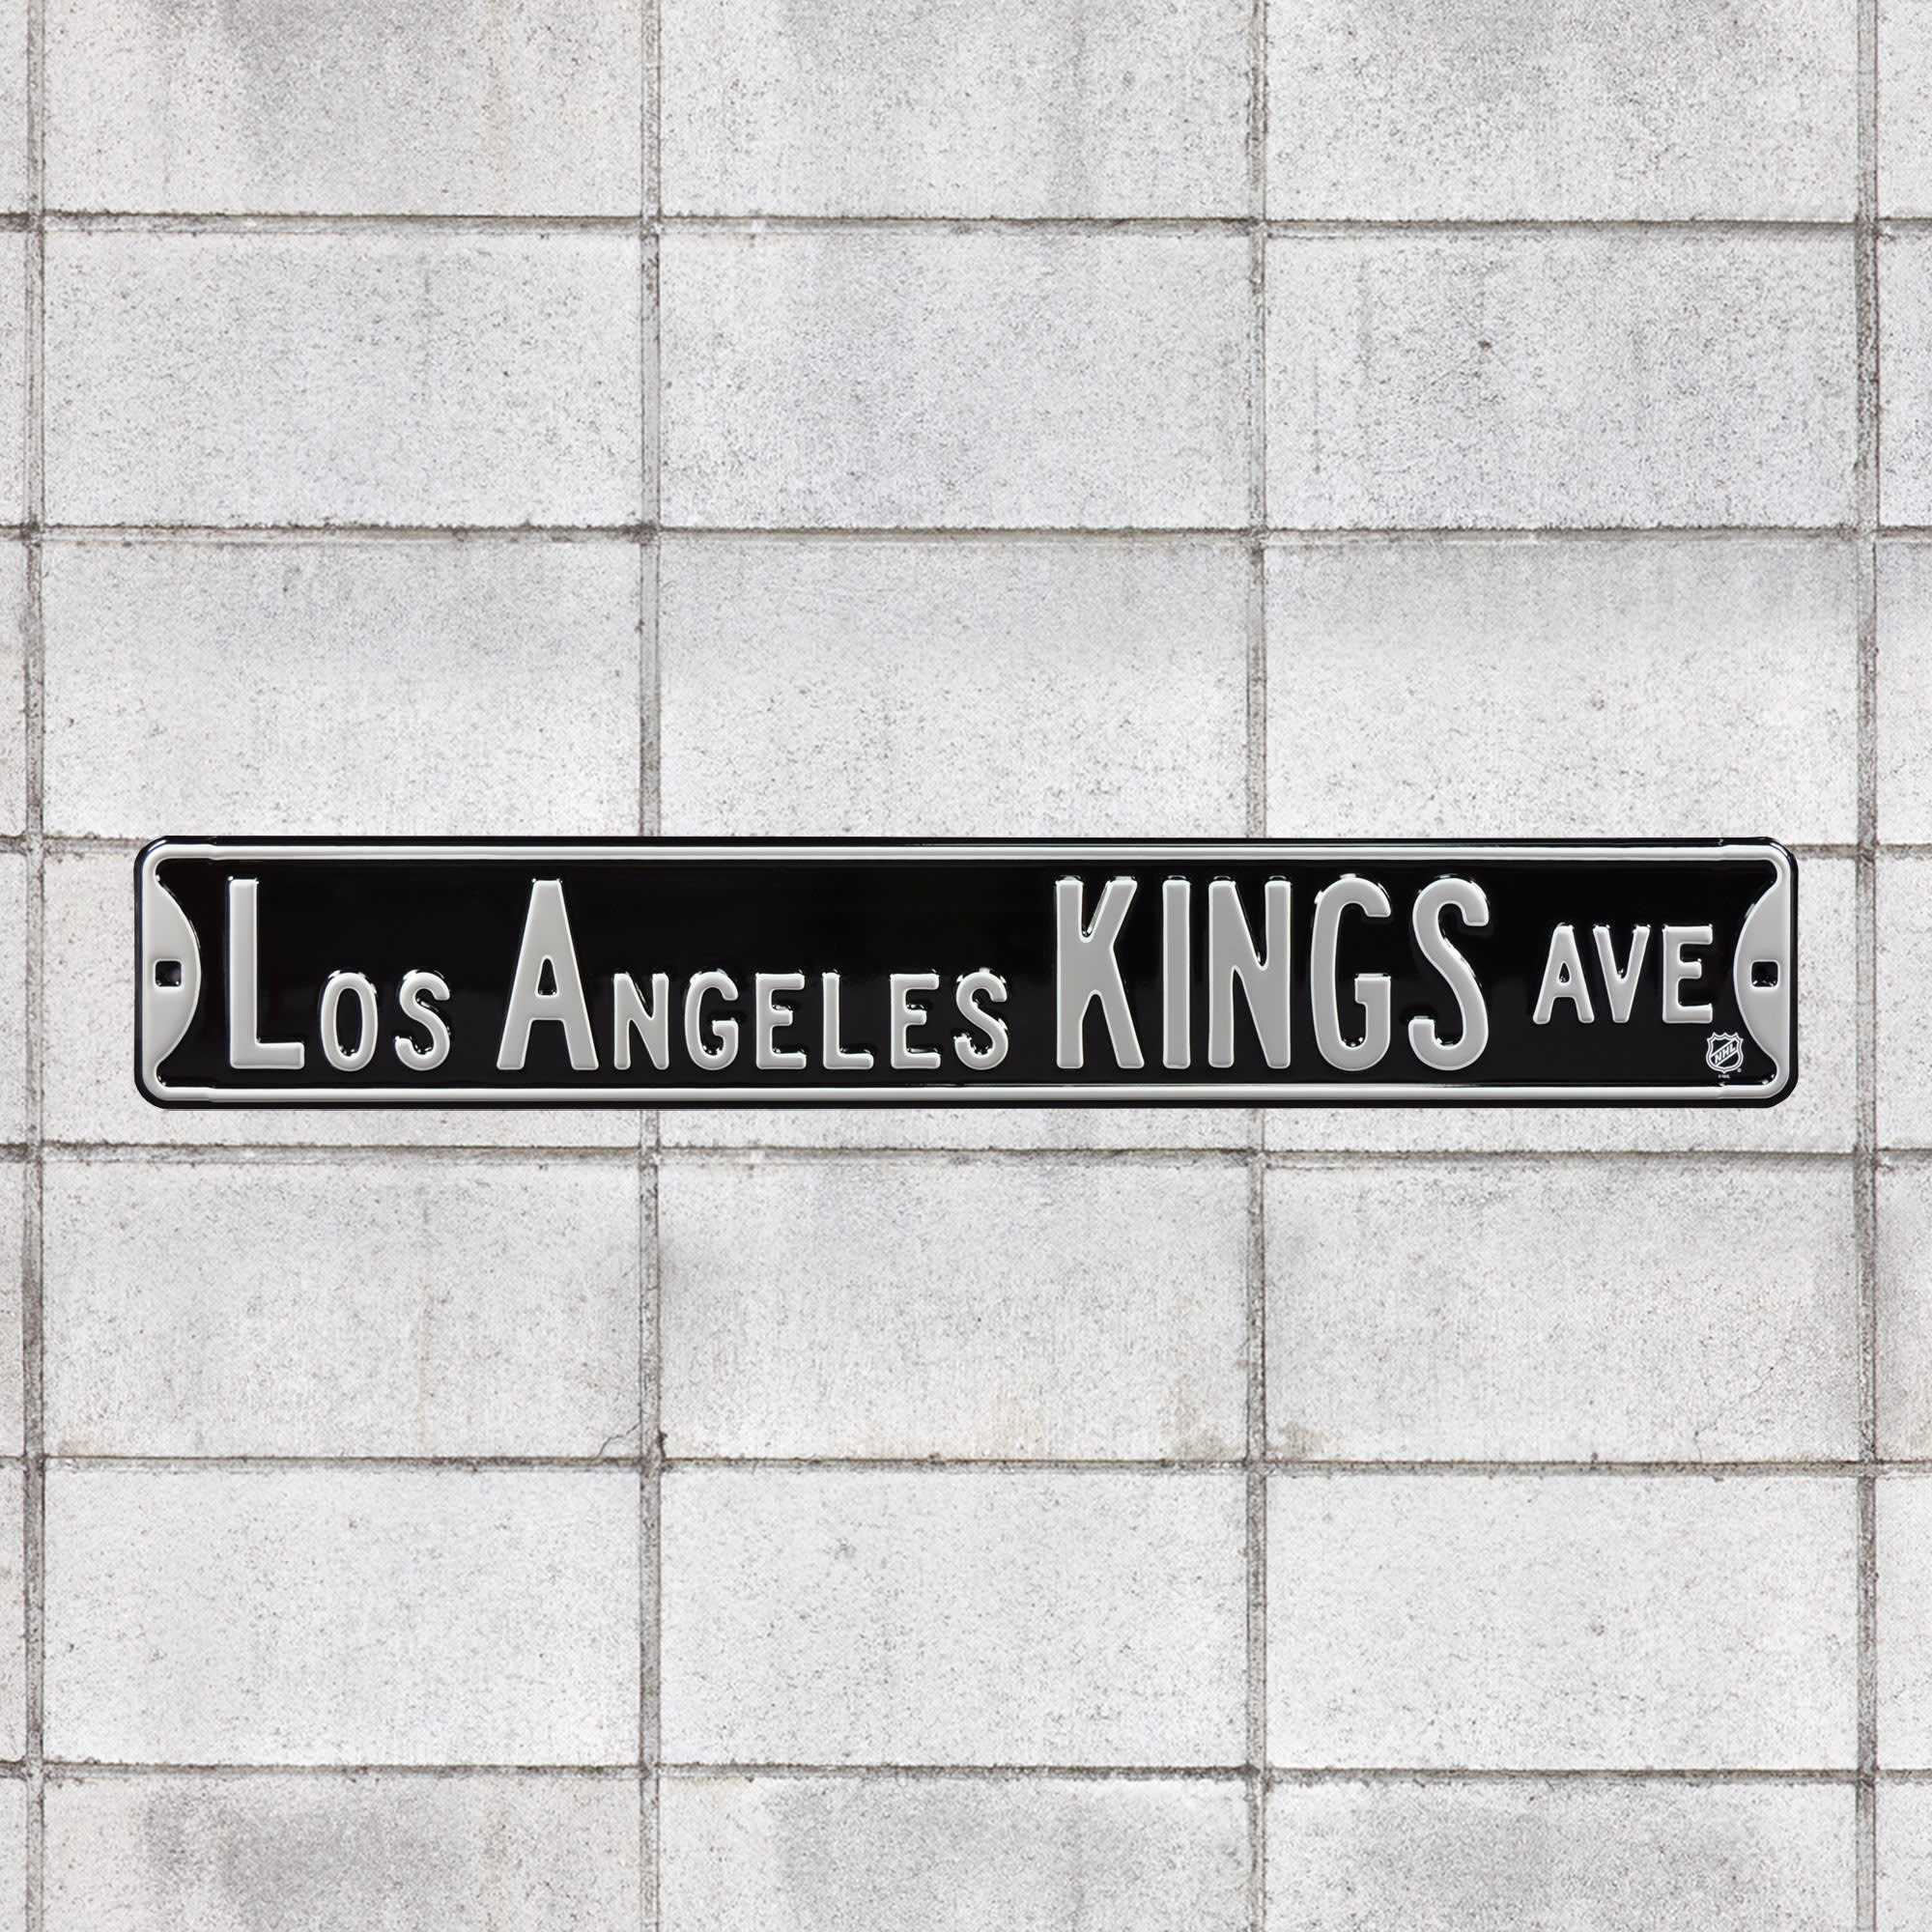 Los Angeles Kings: Los Angeles Kings Avenue - Officially Licensed NHL Metal Street Sign 36.0"W x 6.0"H by Fathead | 100% Steel